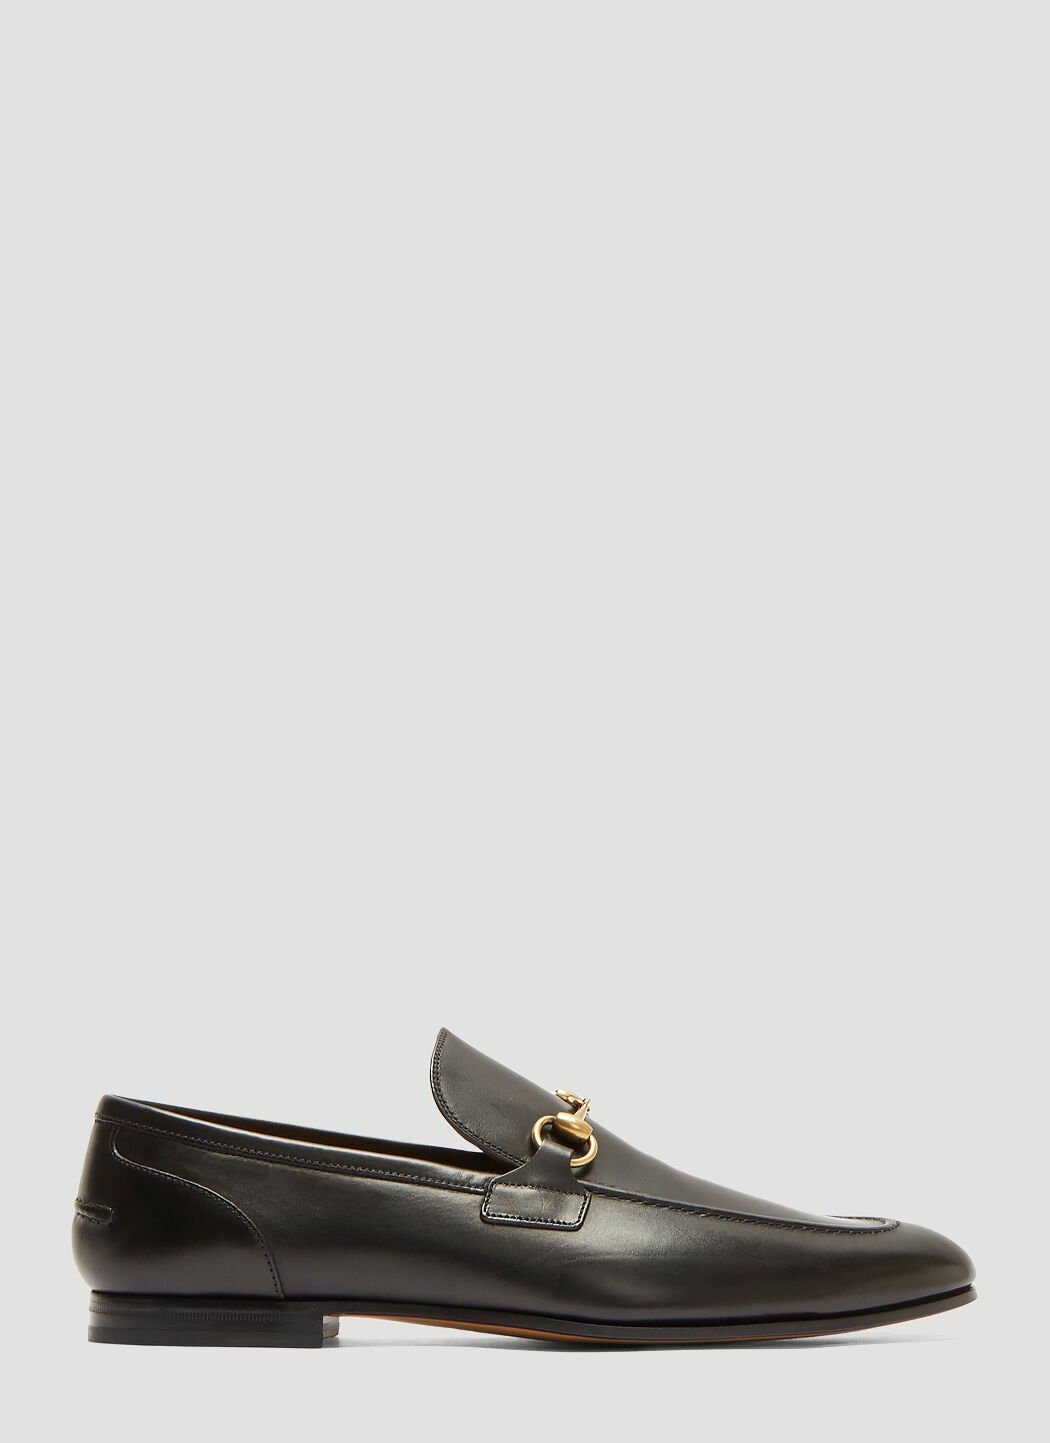 Saint Laurent Jordaan Leather Loafers 黑色 sla0231015